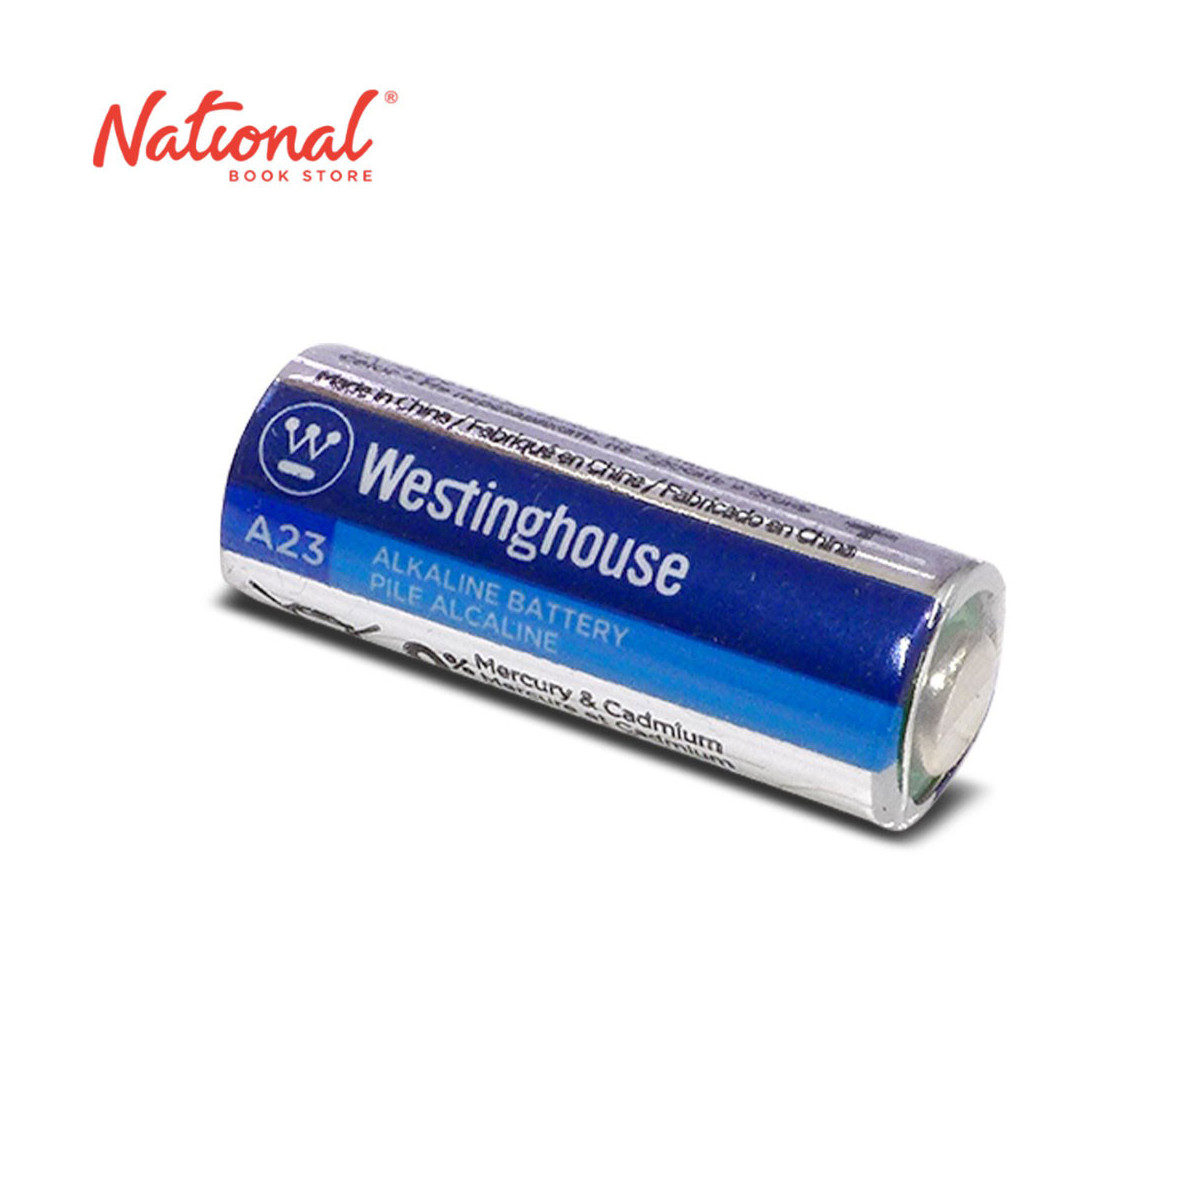 Westinghouse Battery Button A23-BP1 1 piece - Office Supplies